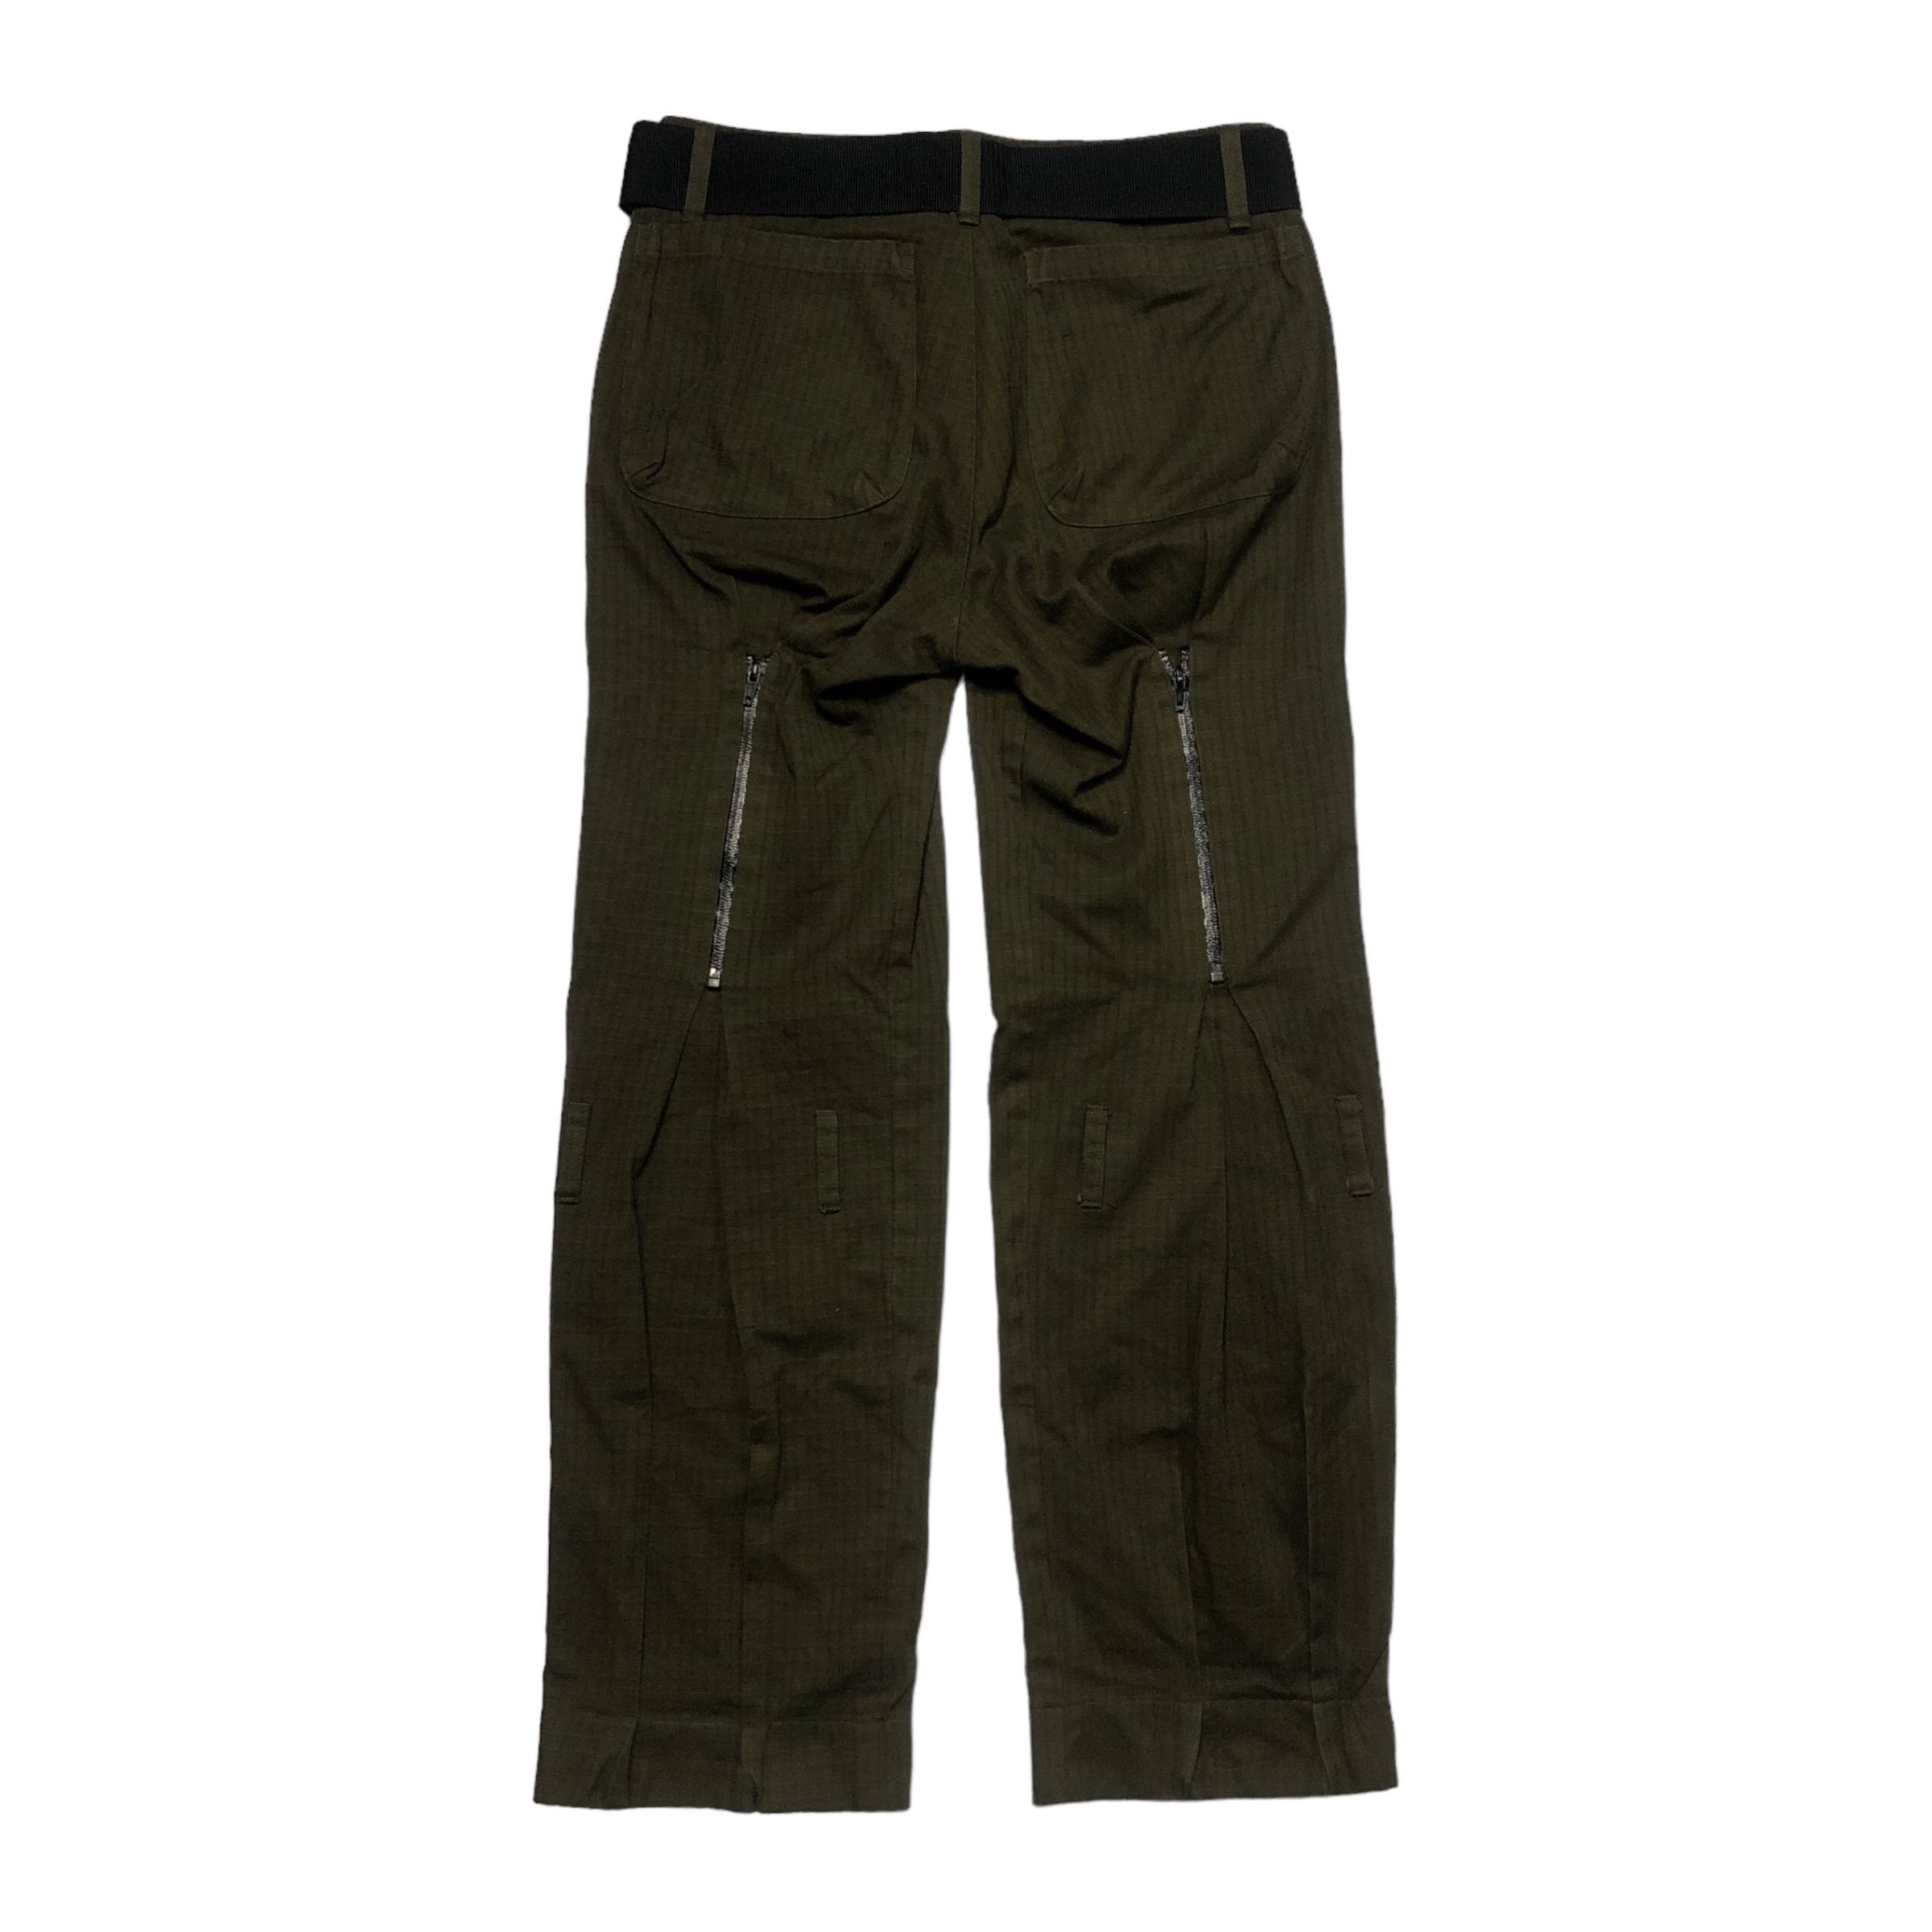 General Research Multi Zipper Fatigue Pants - 2